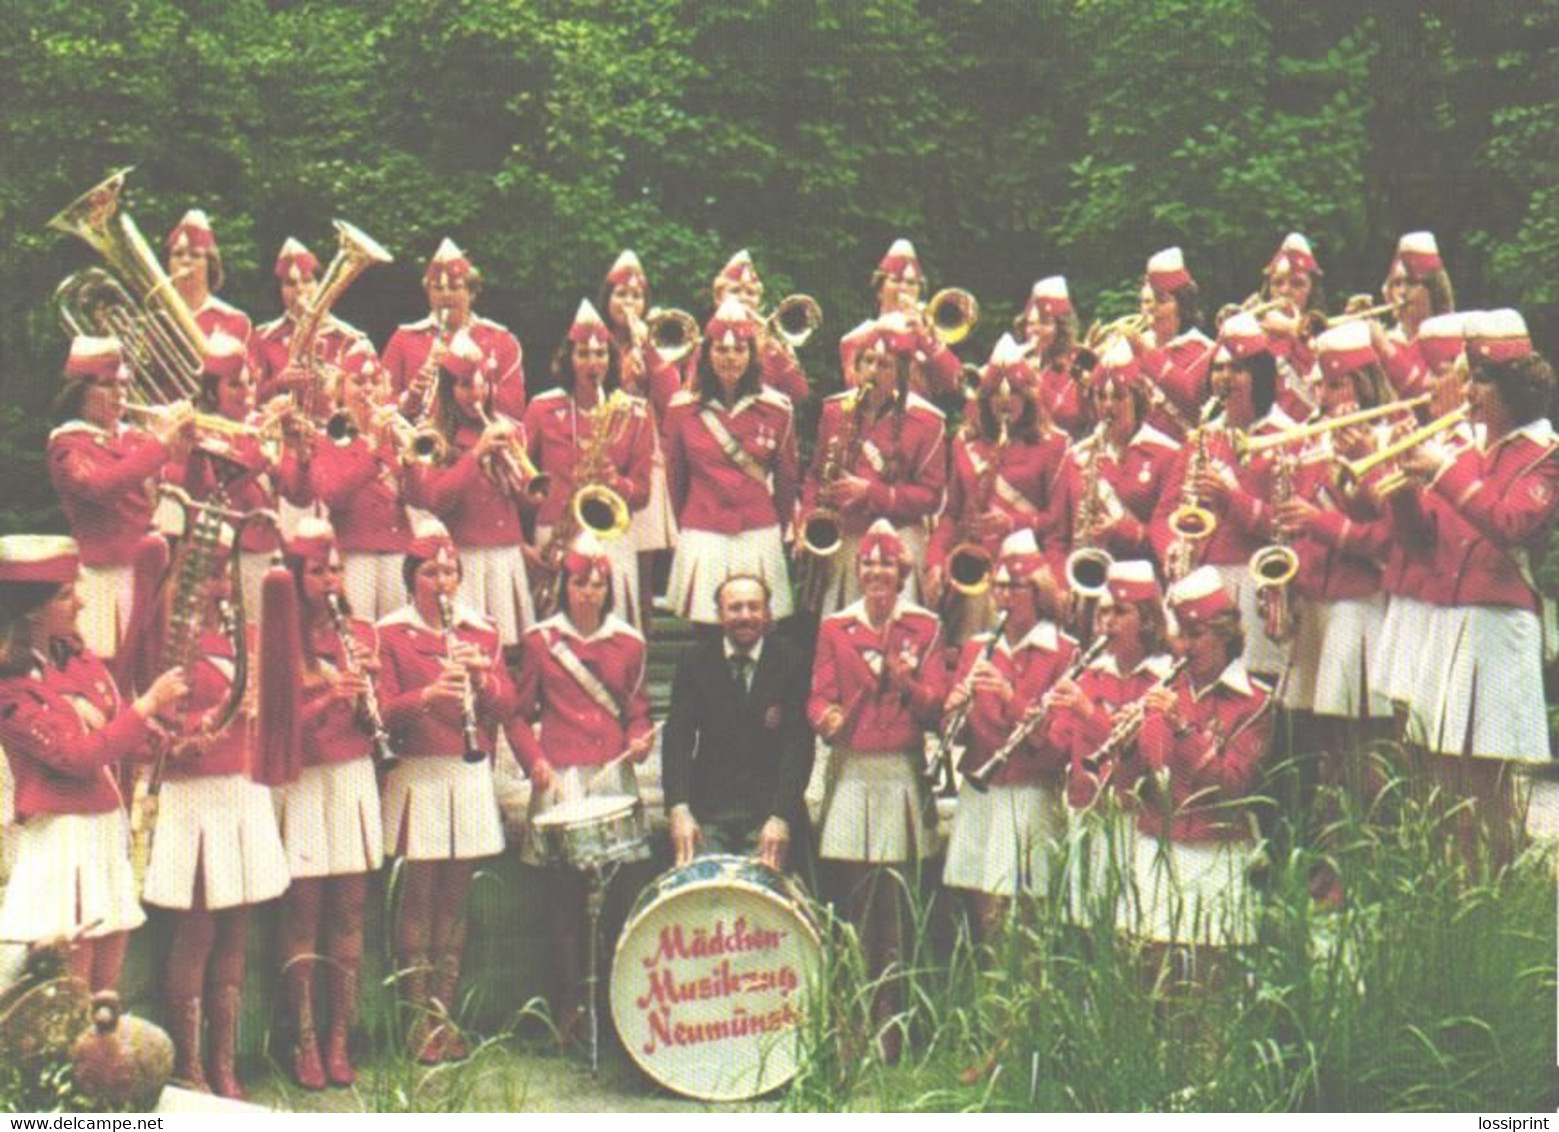 Germany:Neumünster, Girls Orchestra - Europe